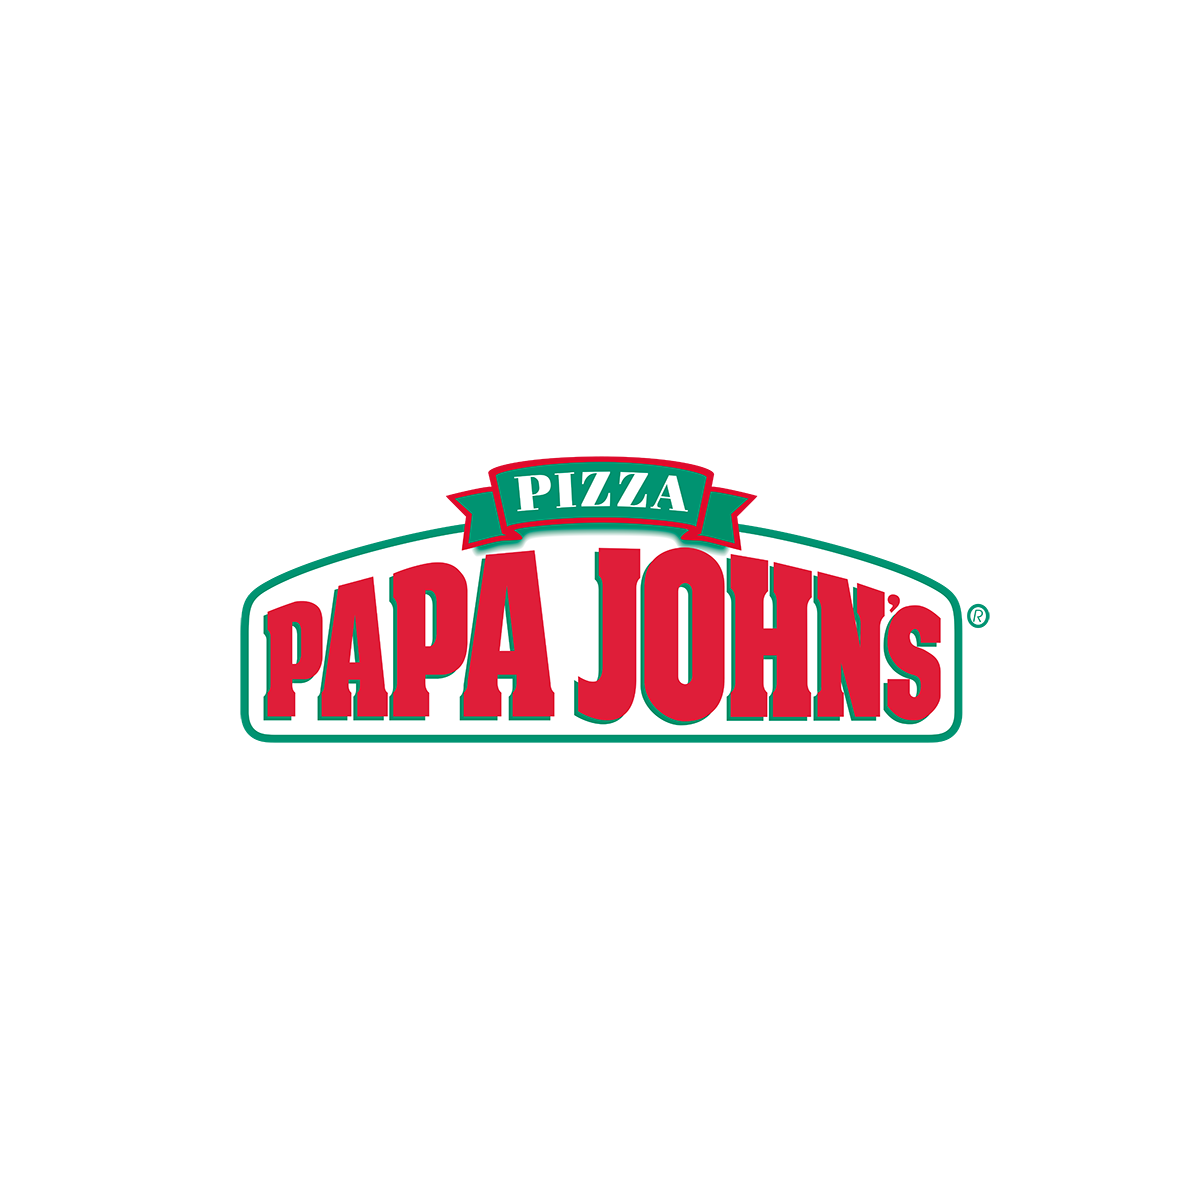 Papa John's Promo Code For 40% Off Any Pizza | Podcast ...